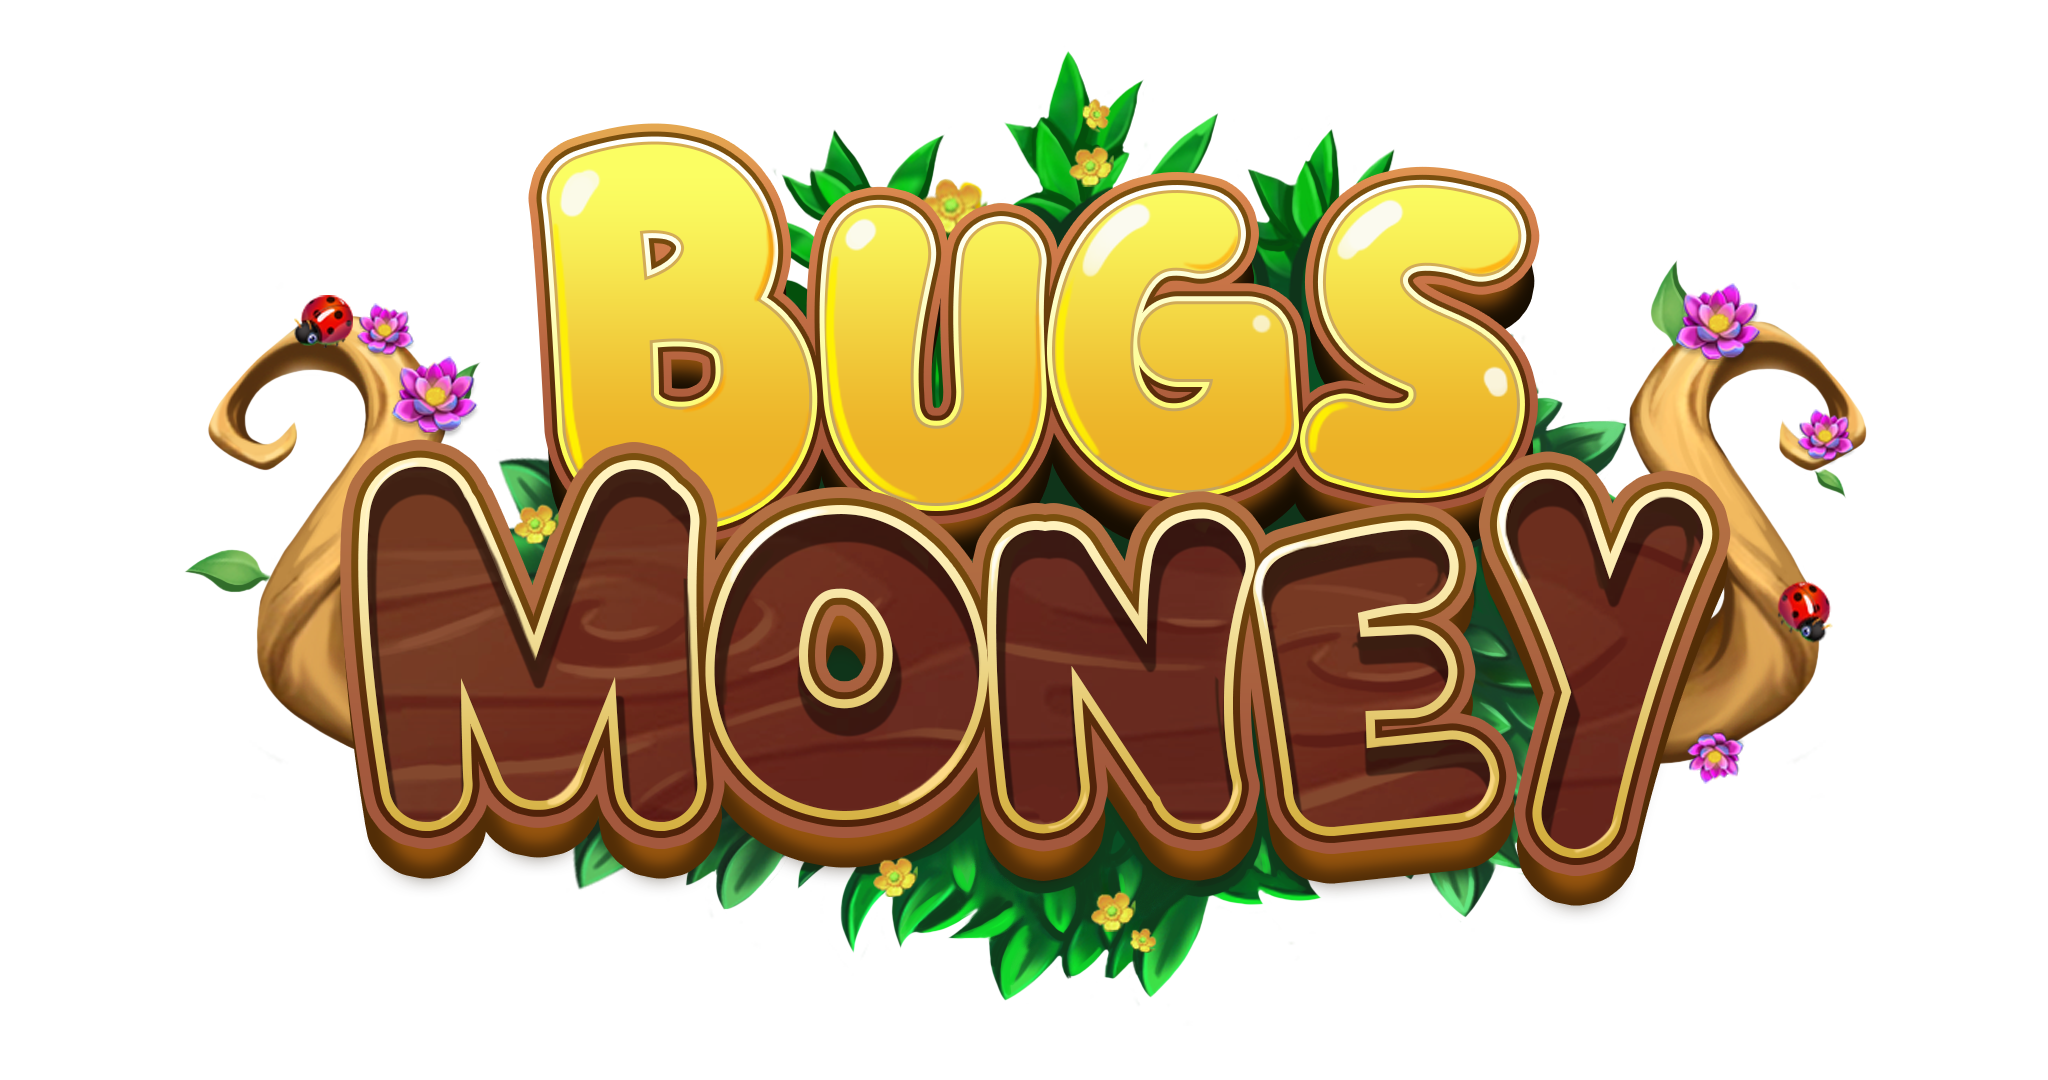 Bugs Money